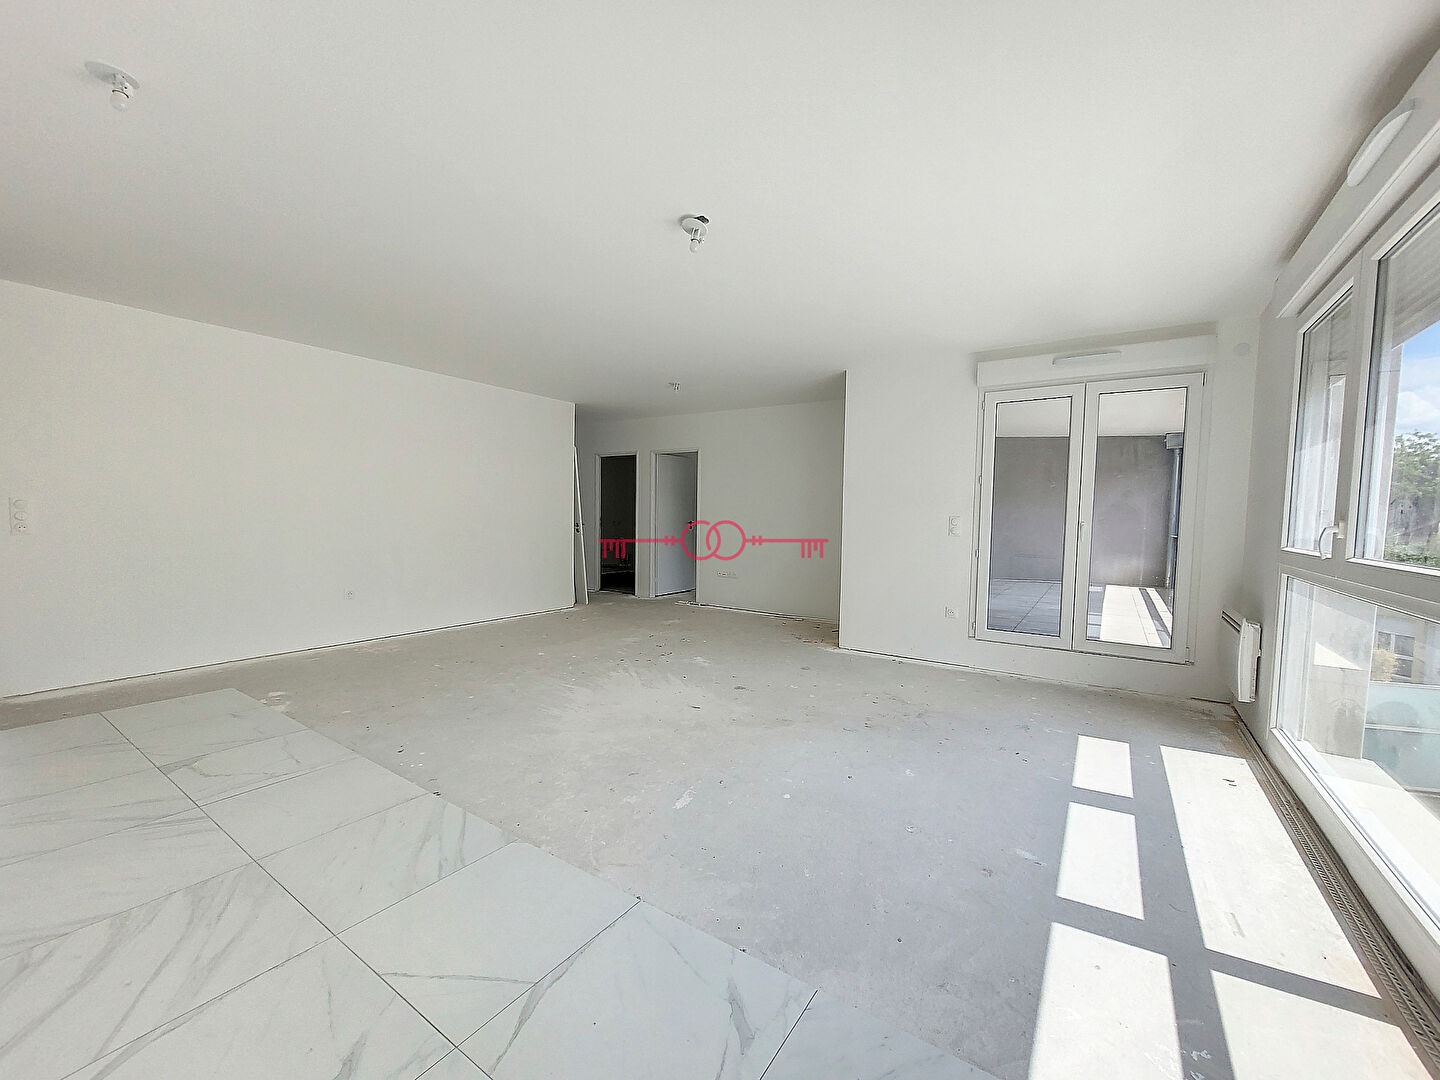 NEUF - Appartement 5 pièce(s) 100.57 m2 - 6